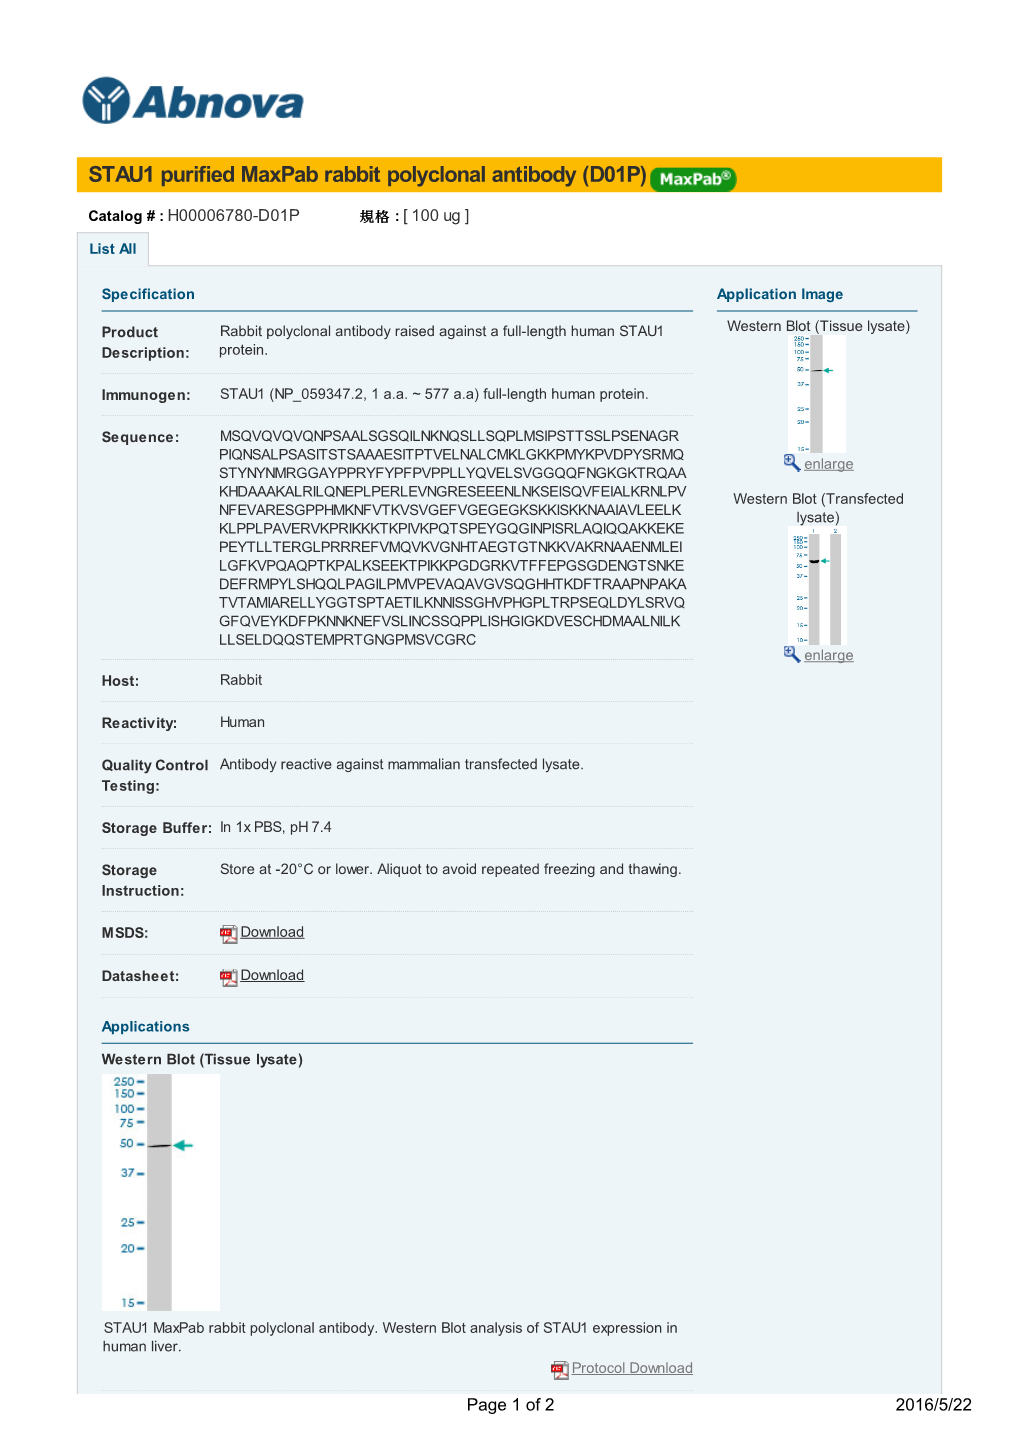 STAU1 Purified Maxpab Rabbit Polyclonal Antibody (D01P)